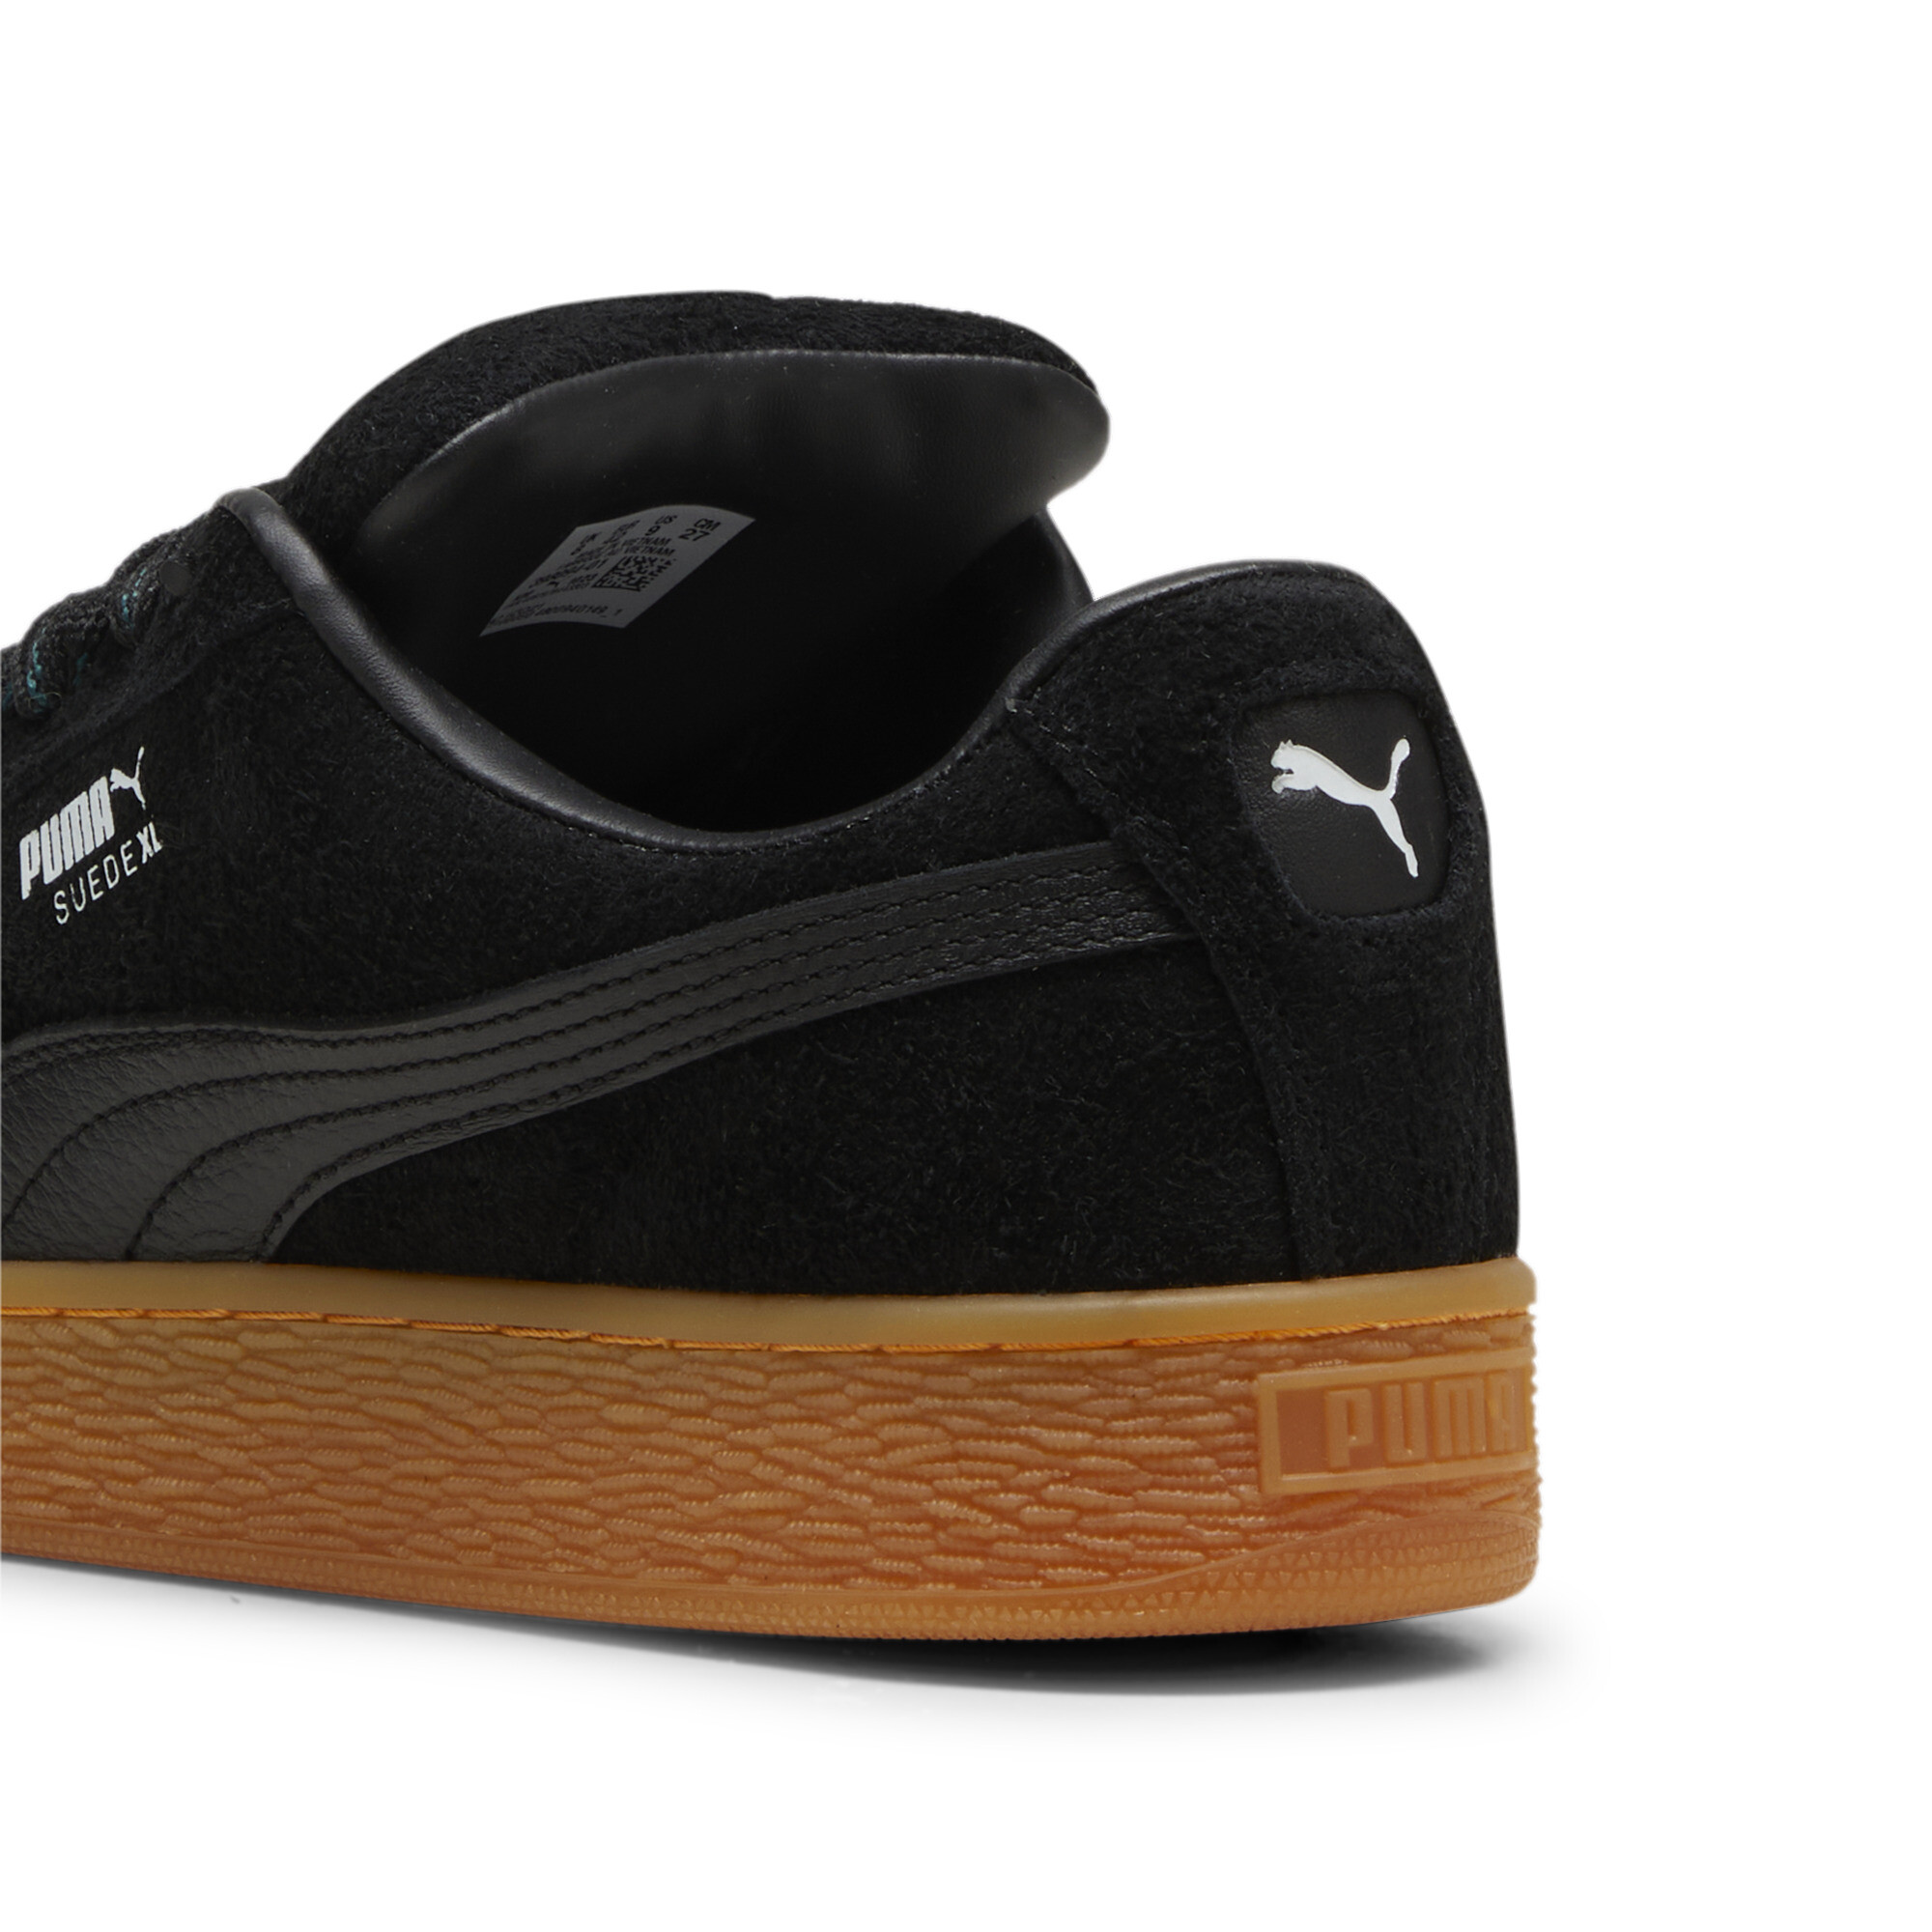 Puma Suede XL Flecked Unisex, Black, Size 44.5, Shoes